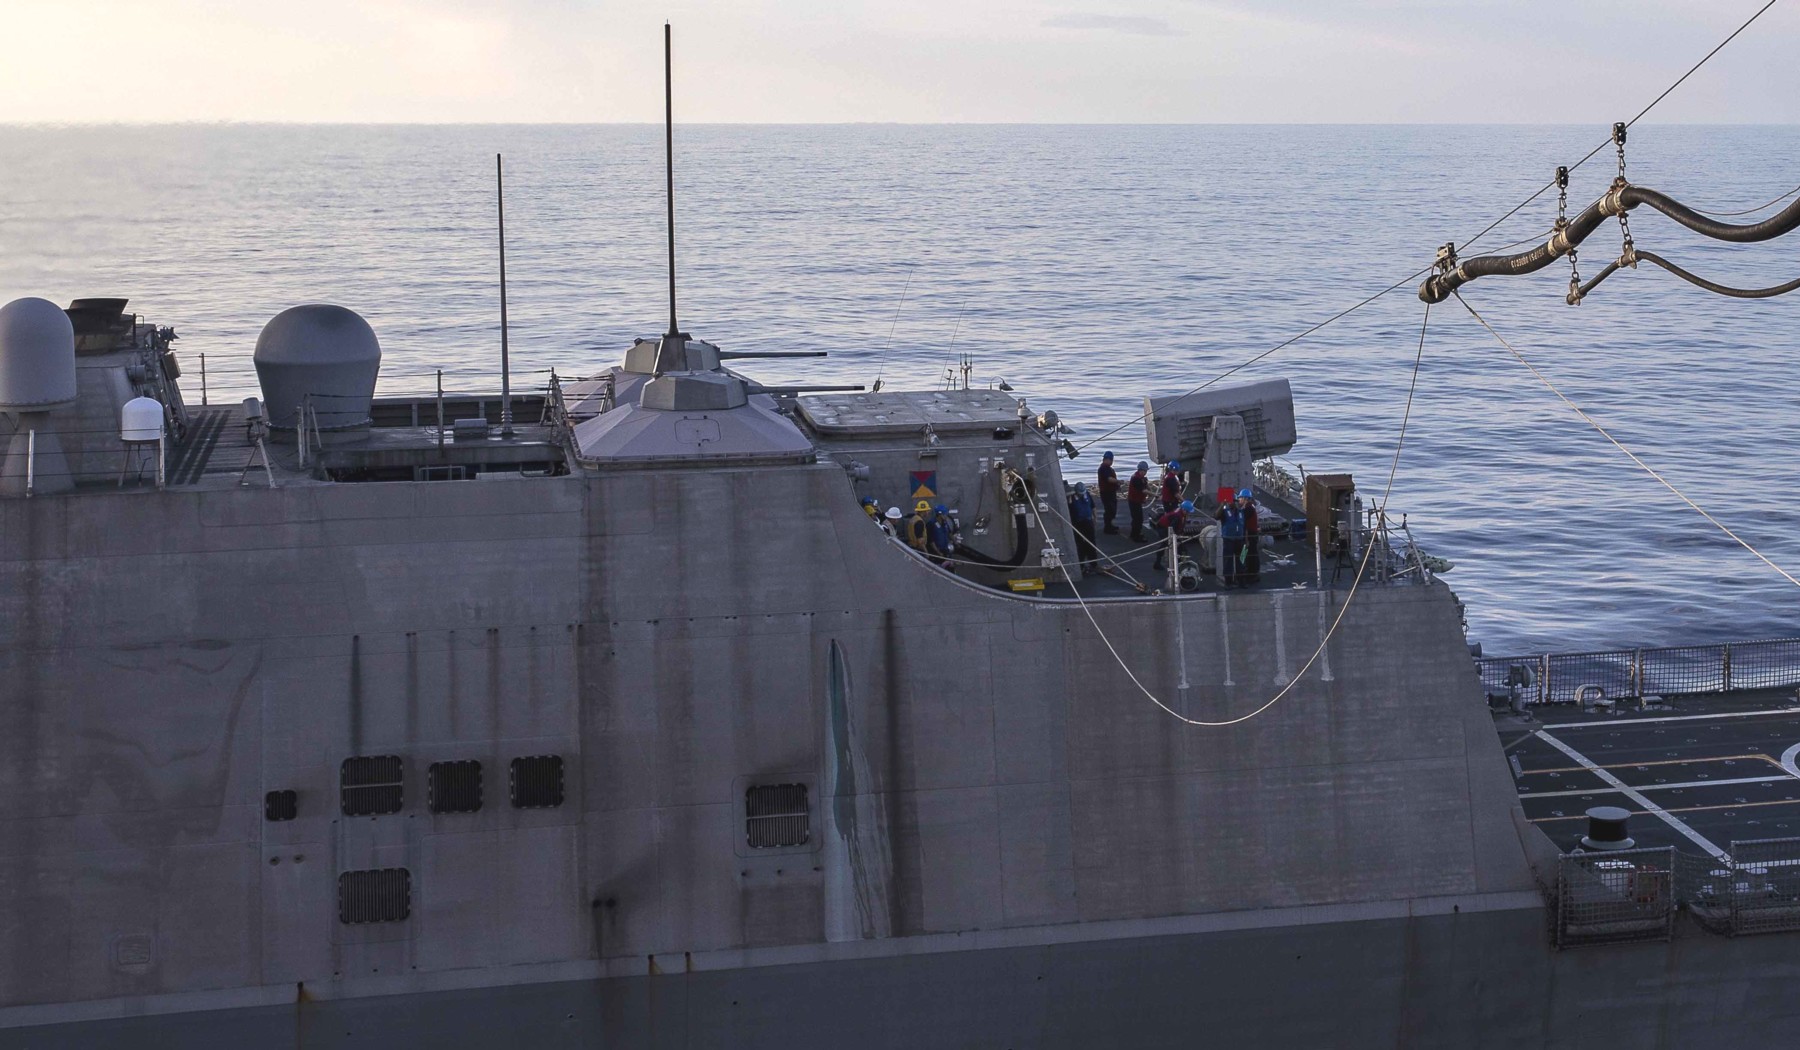 lcs-5 uss milwaukee freedom class littoral combat ship us navy 55 replenishment at sea ras